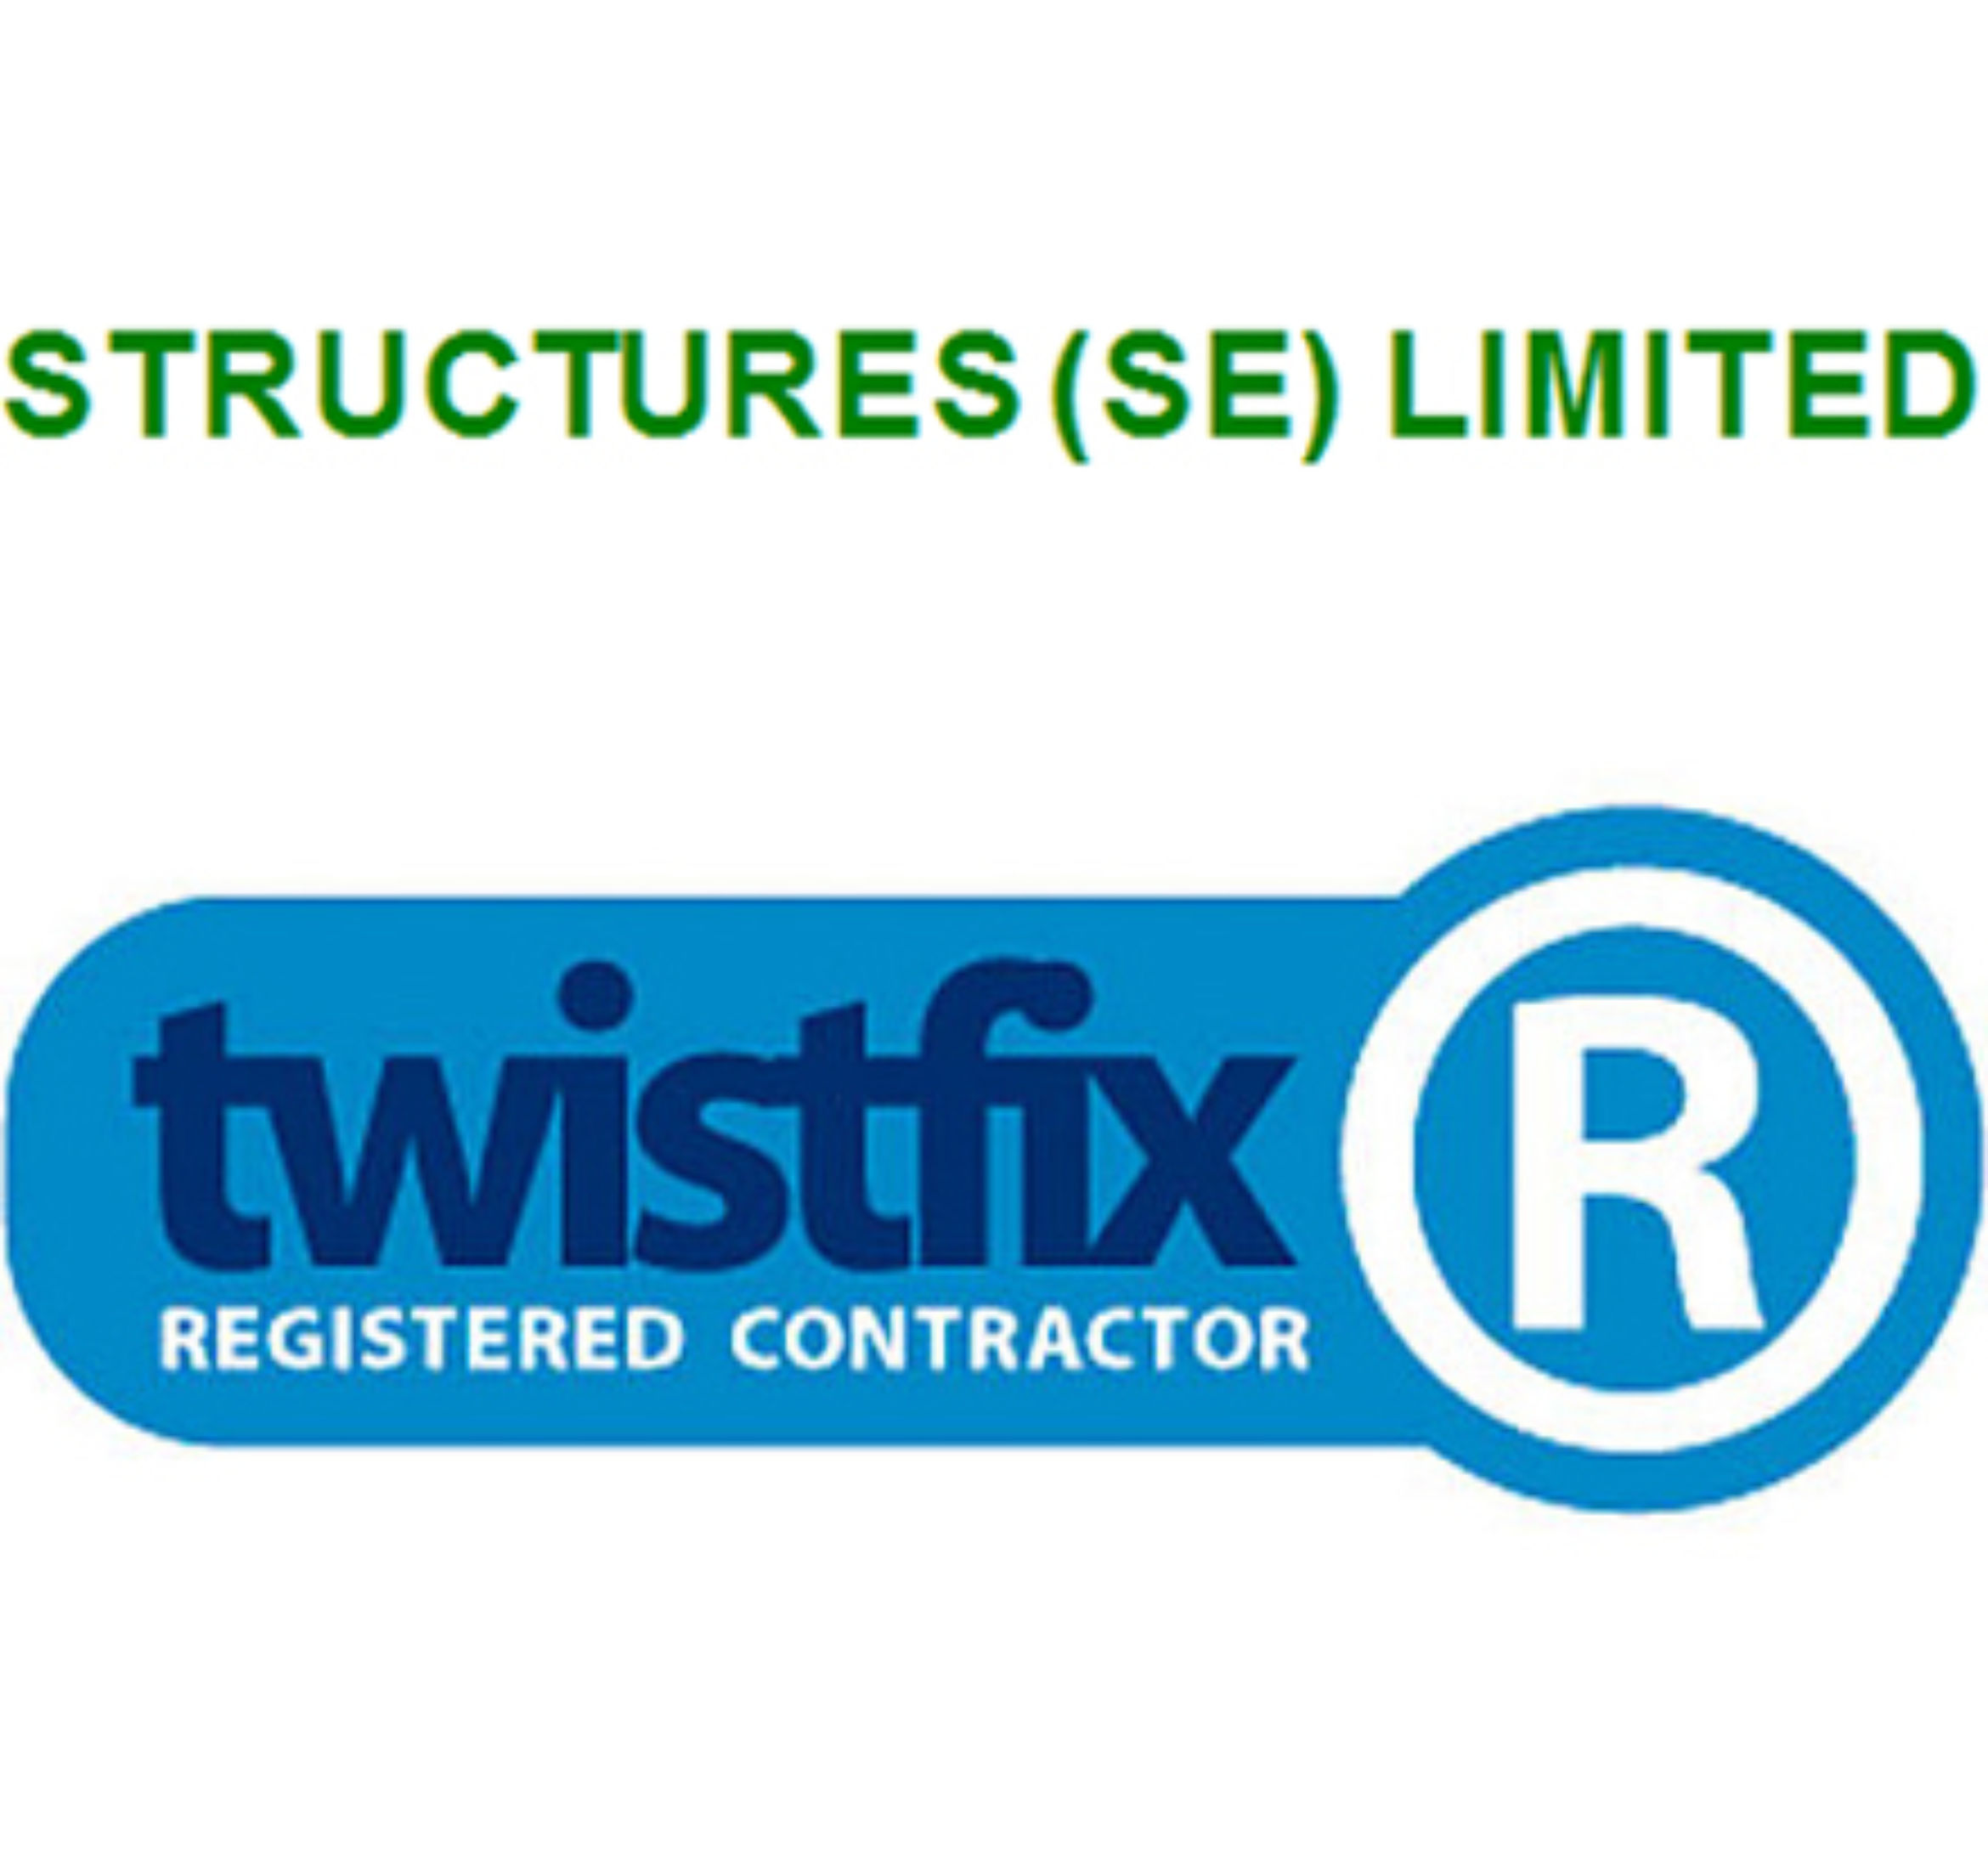 registered contractor struc